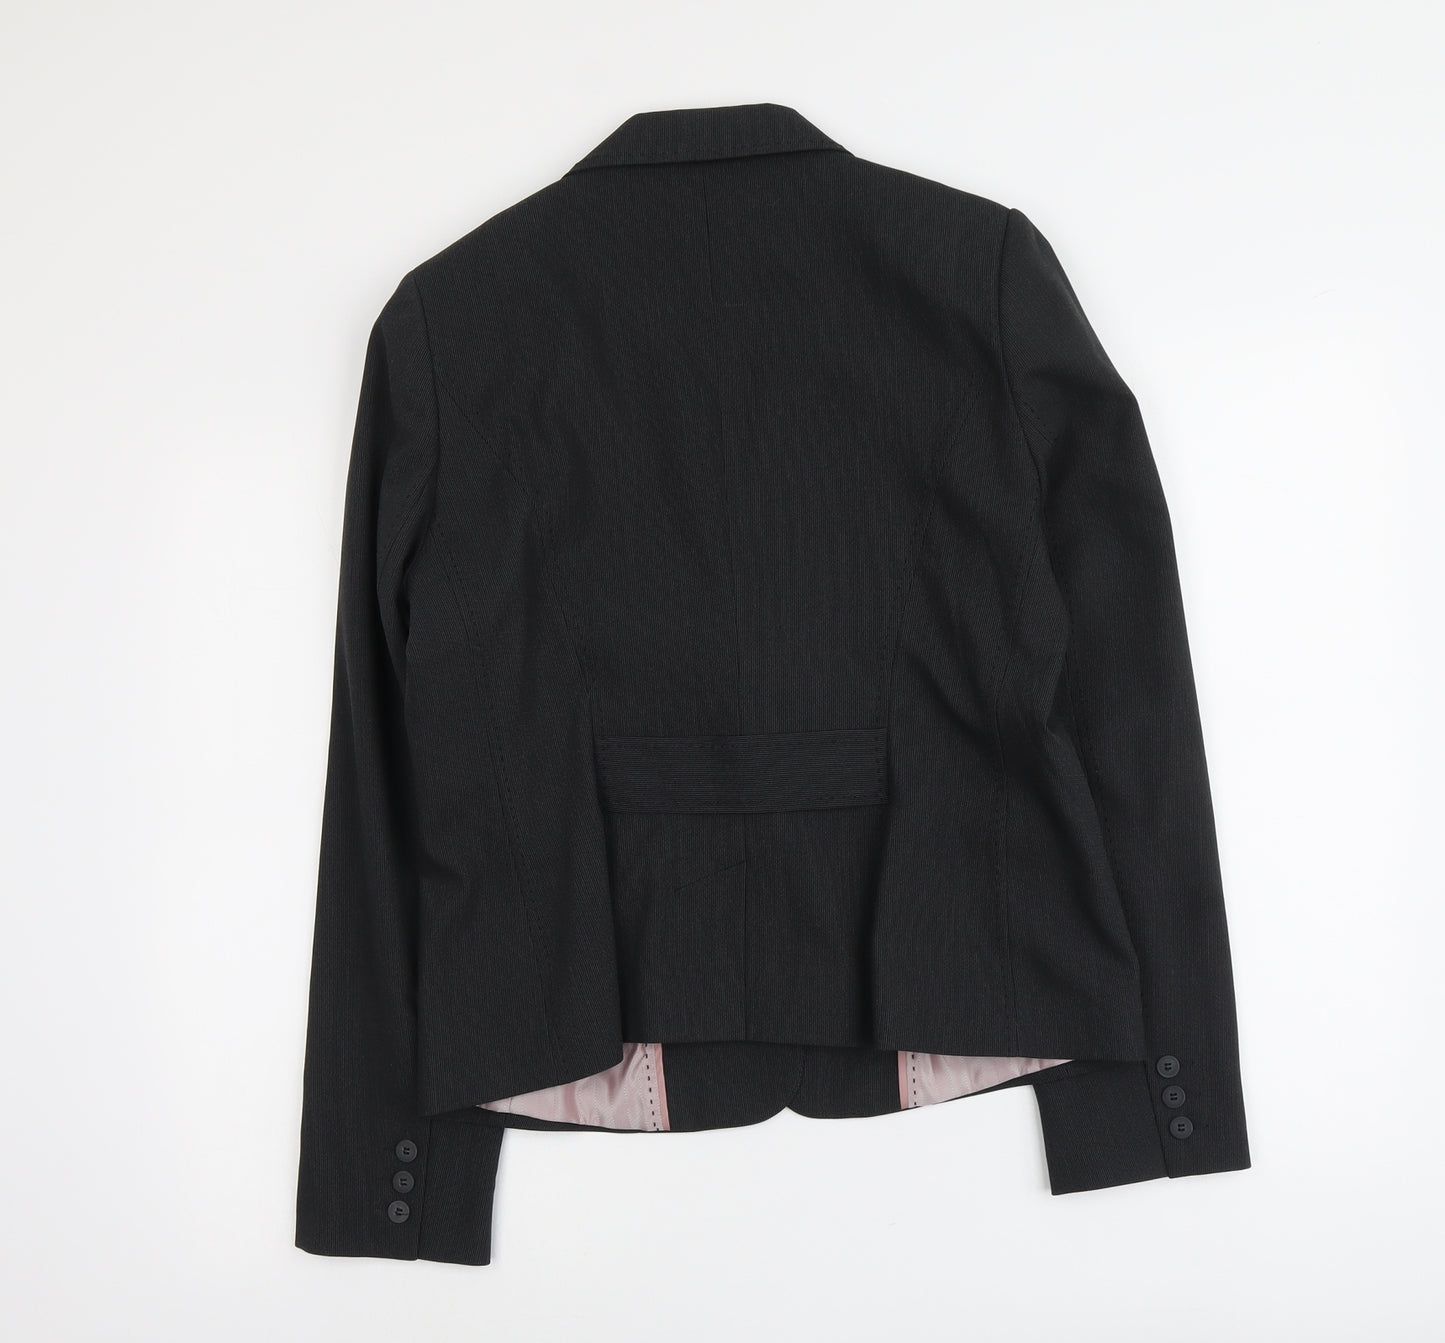 F&F Womens Grey Polyester Jacket Suit Jacket Size 16